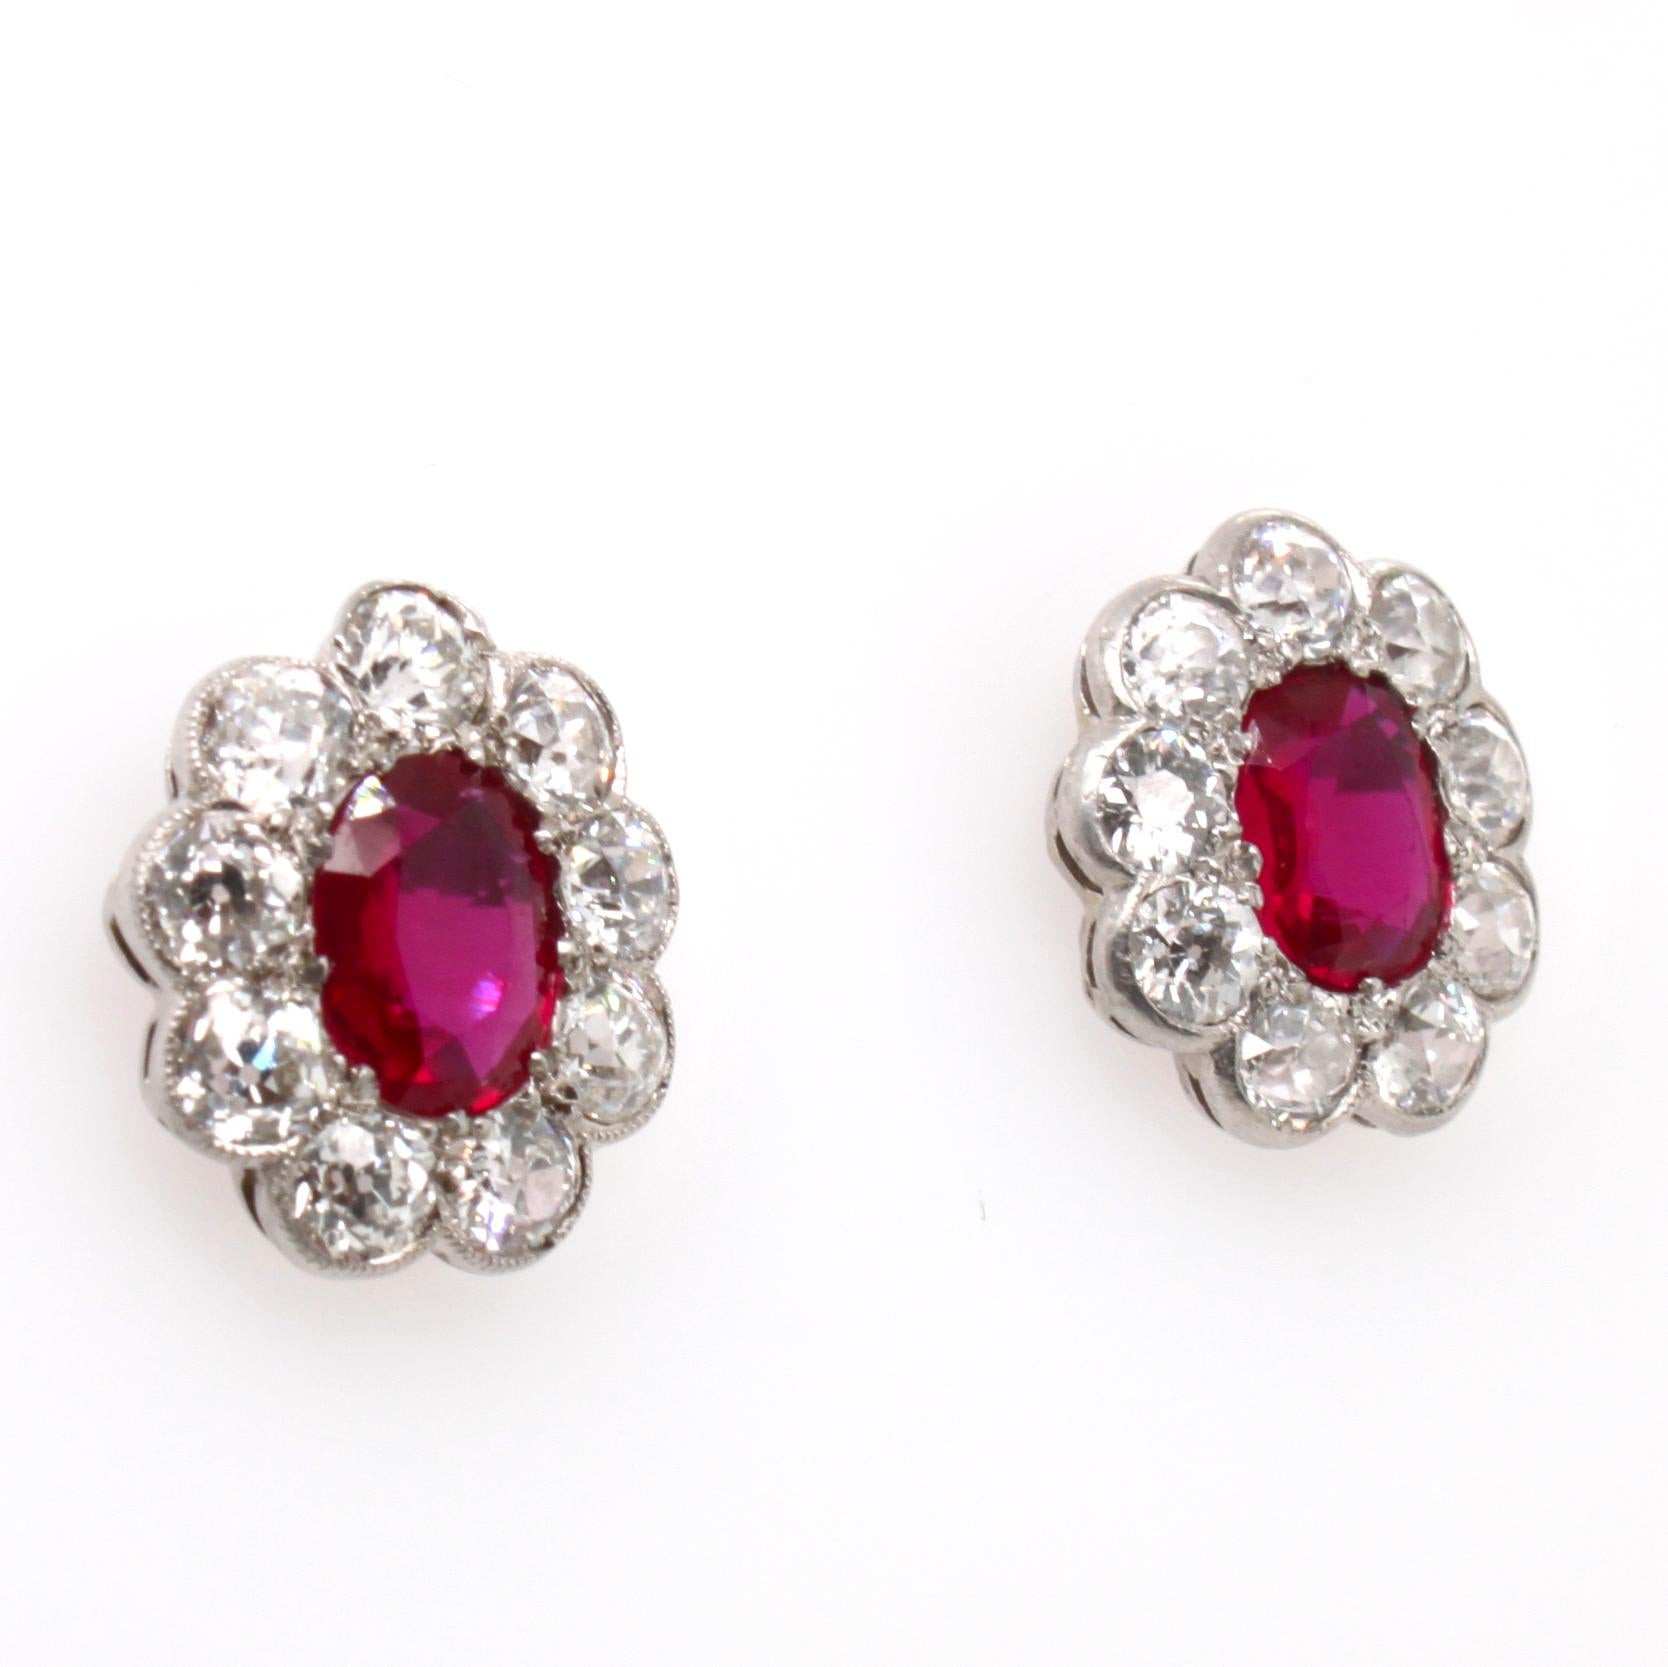 Victorian Edwardian Burmese Ruby and Diamond Cluster Earrings, 1910s